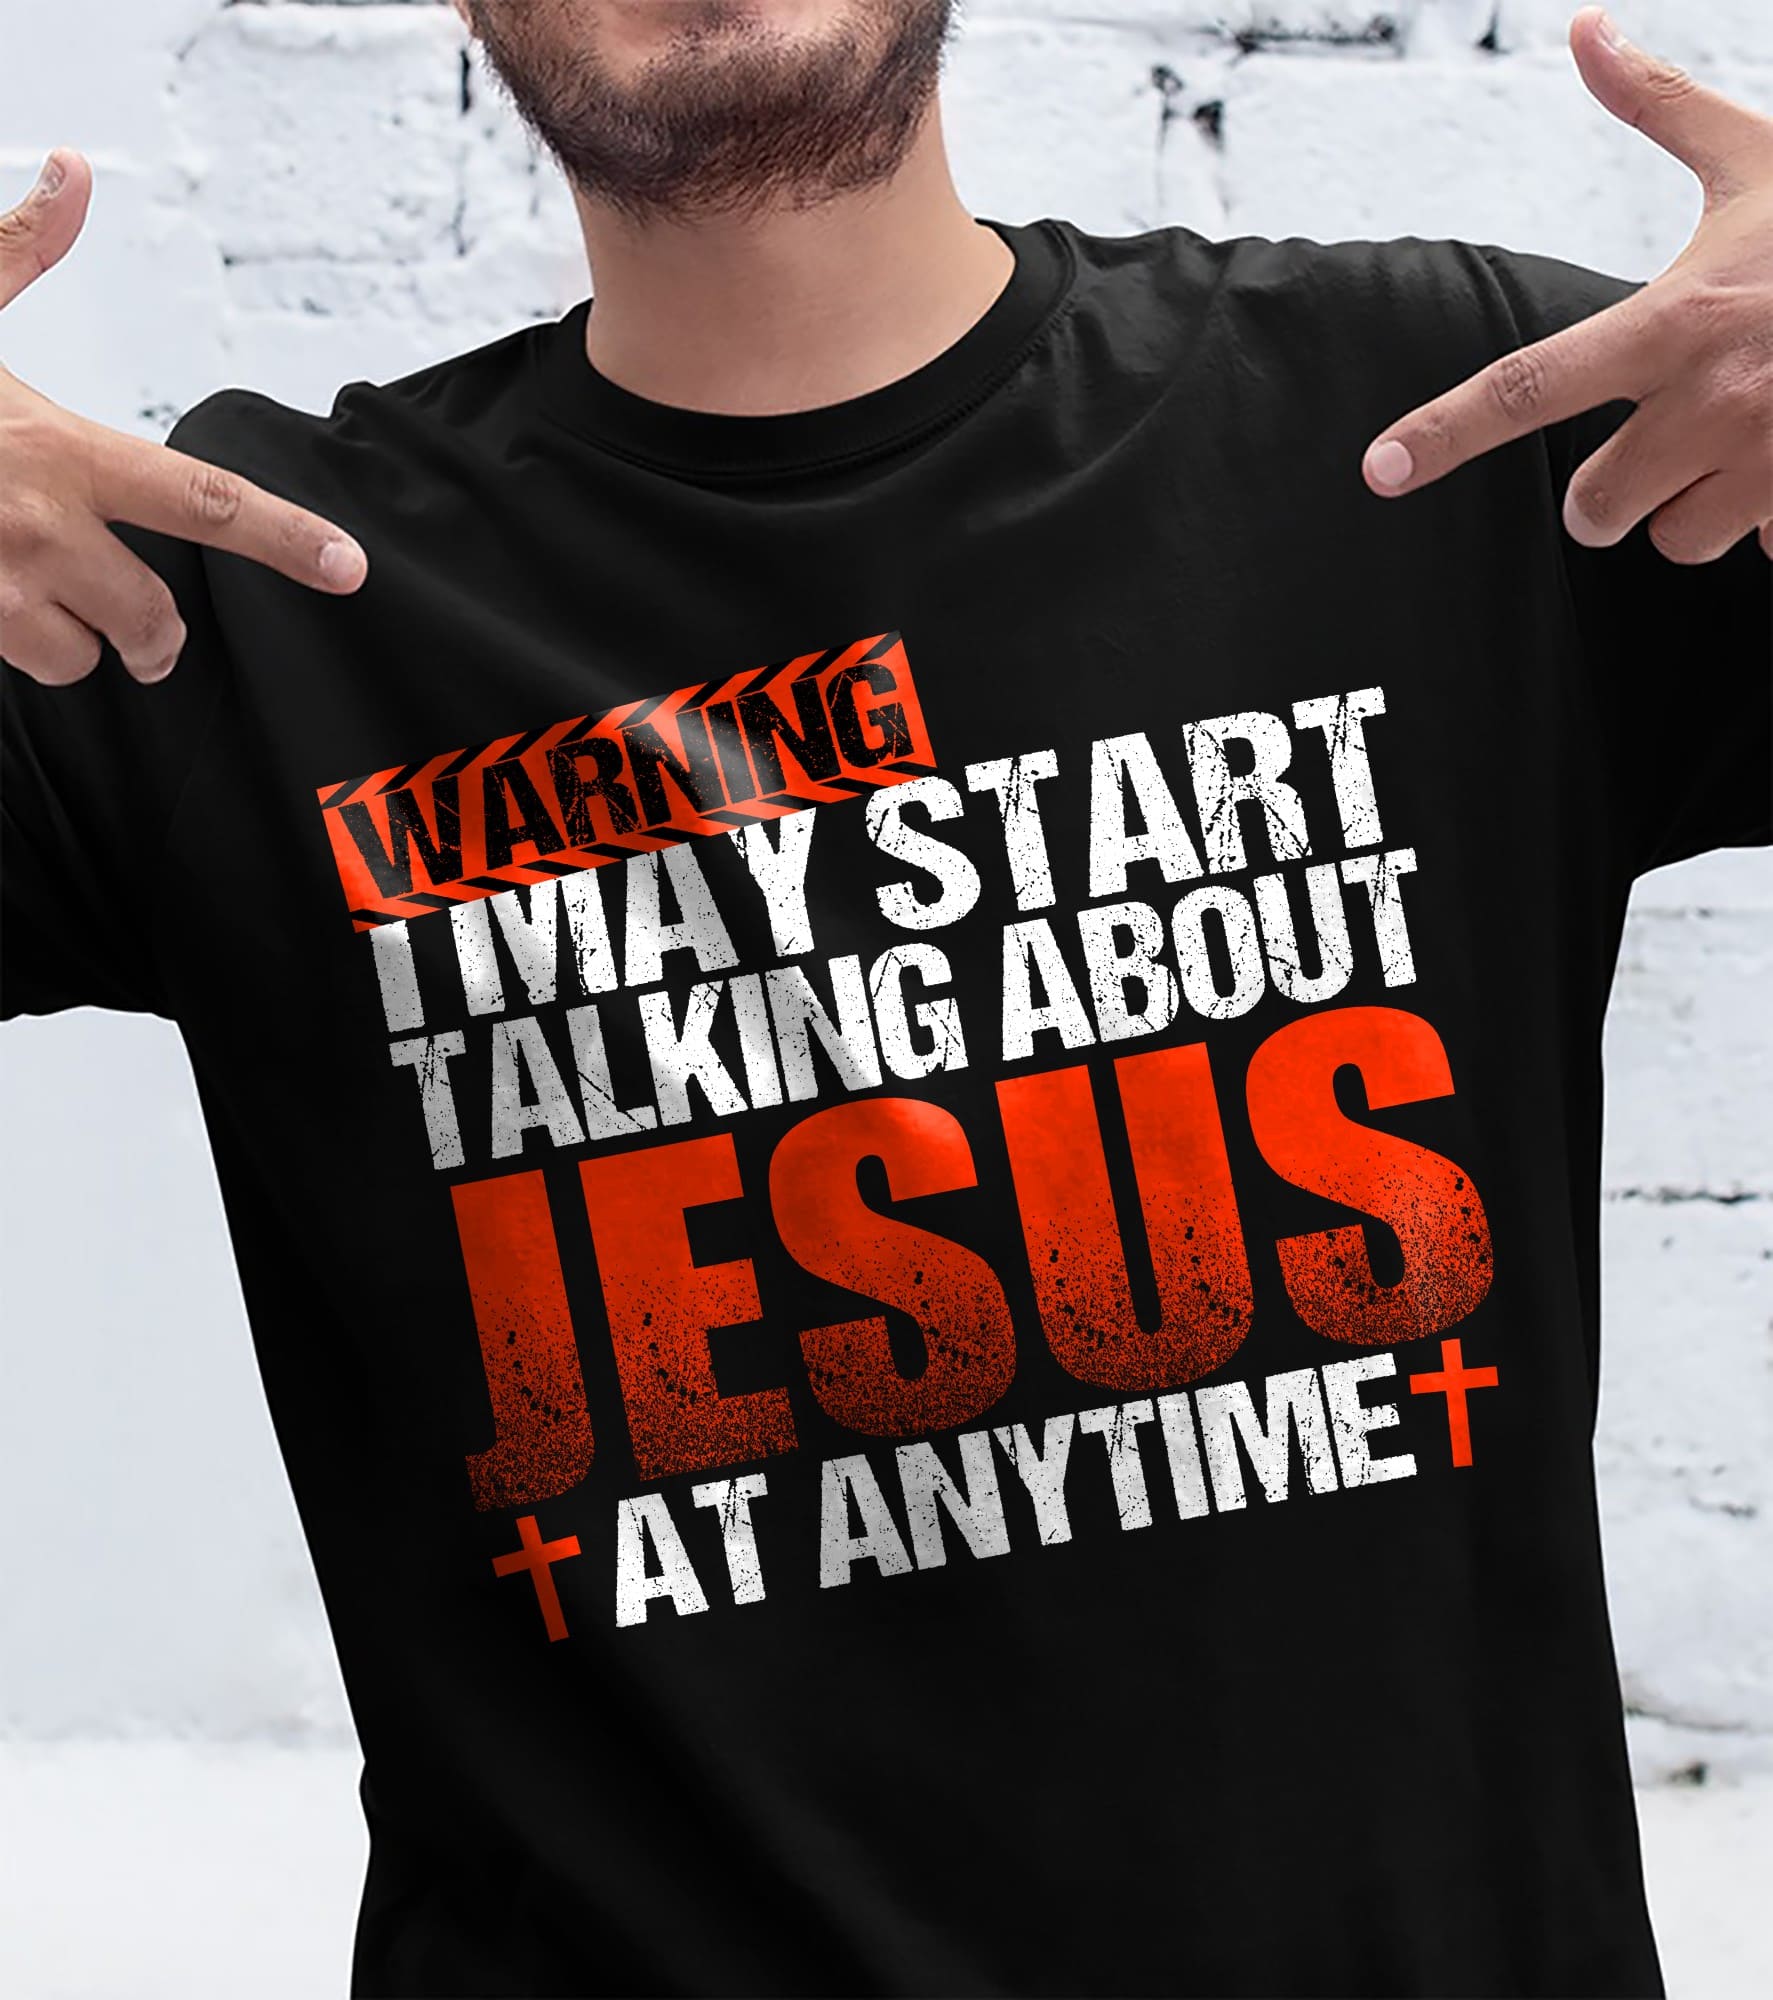 Warning i may start talking about Jesus at anytime